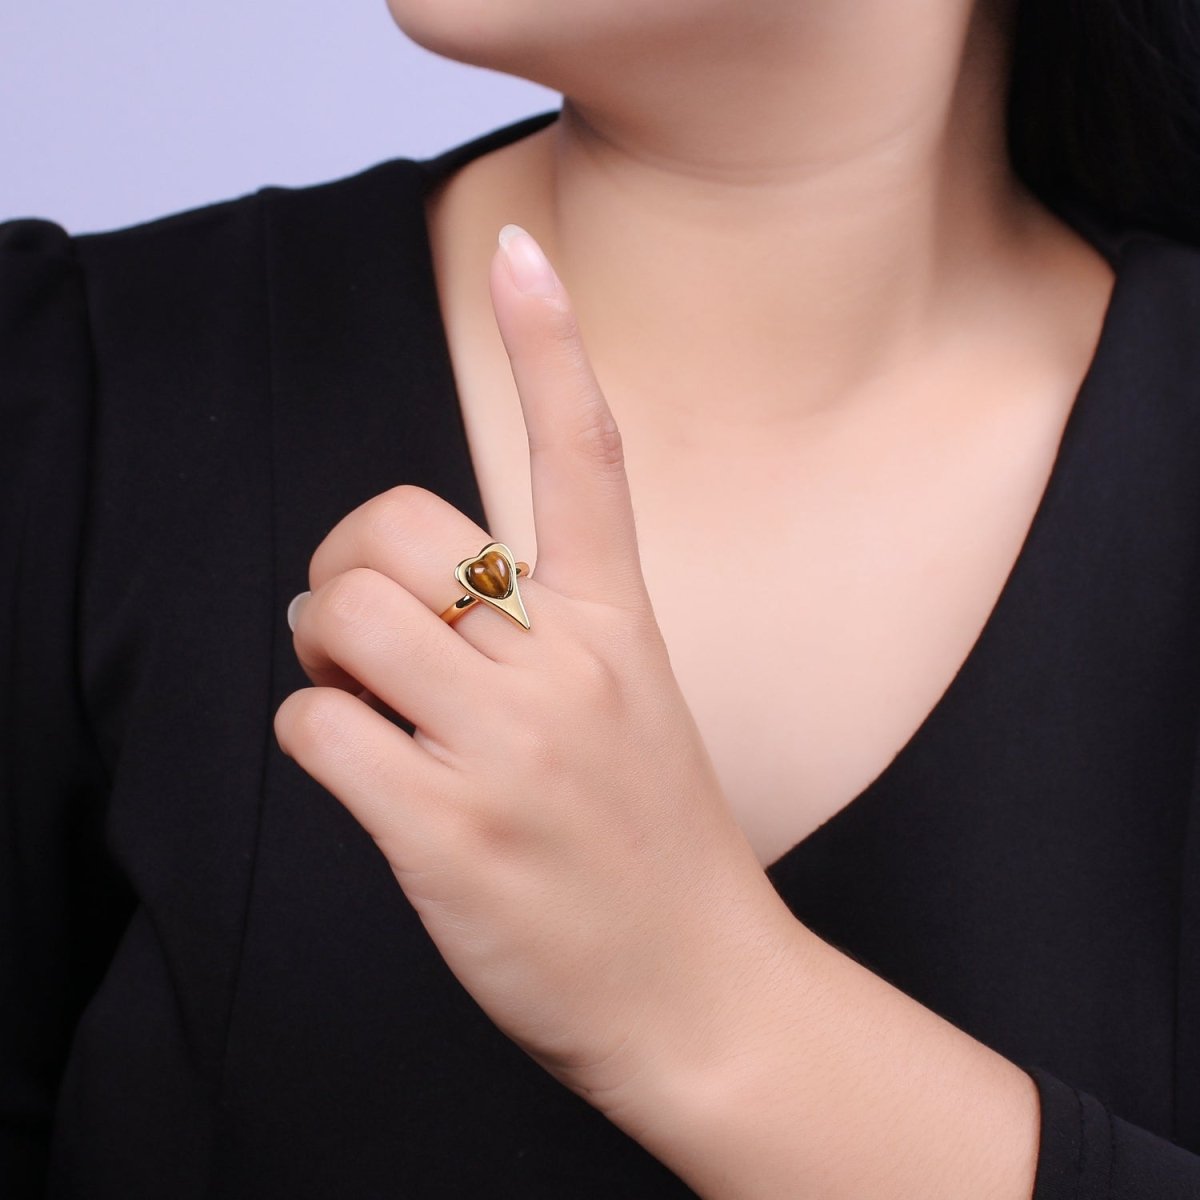 Tiger Eye Beads Heart Ring in 14k Gold Filled Open Adjustable Gemstone Ring U-235 - DLUXCA